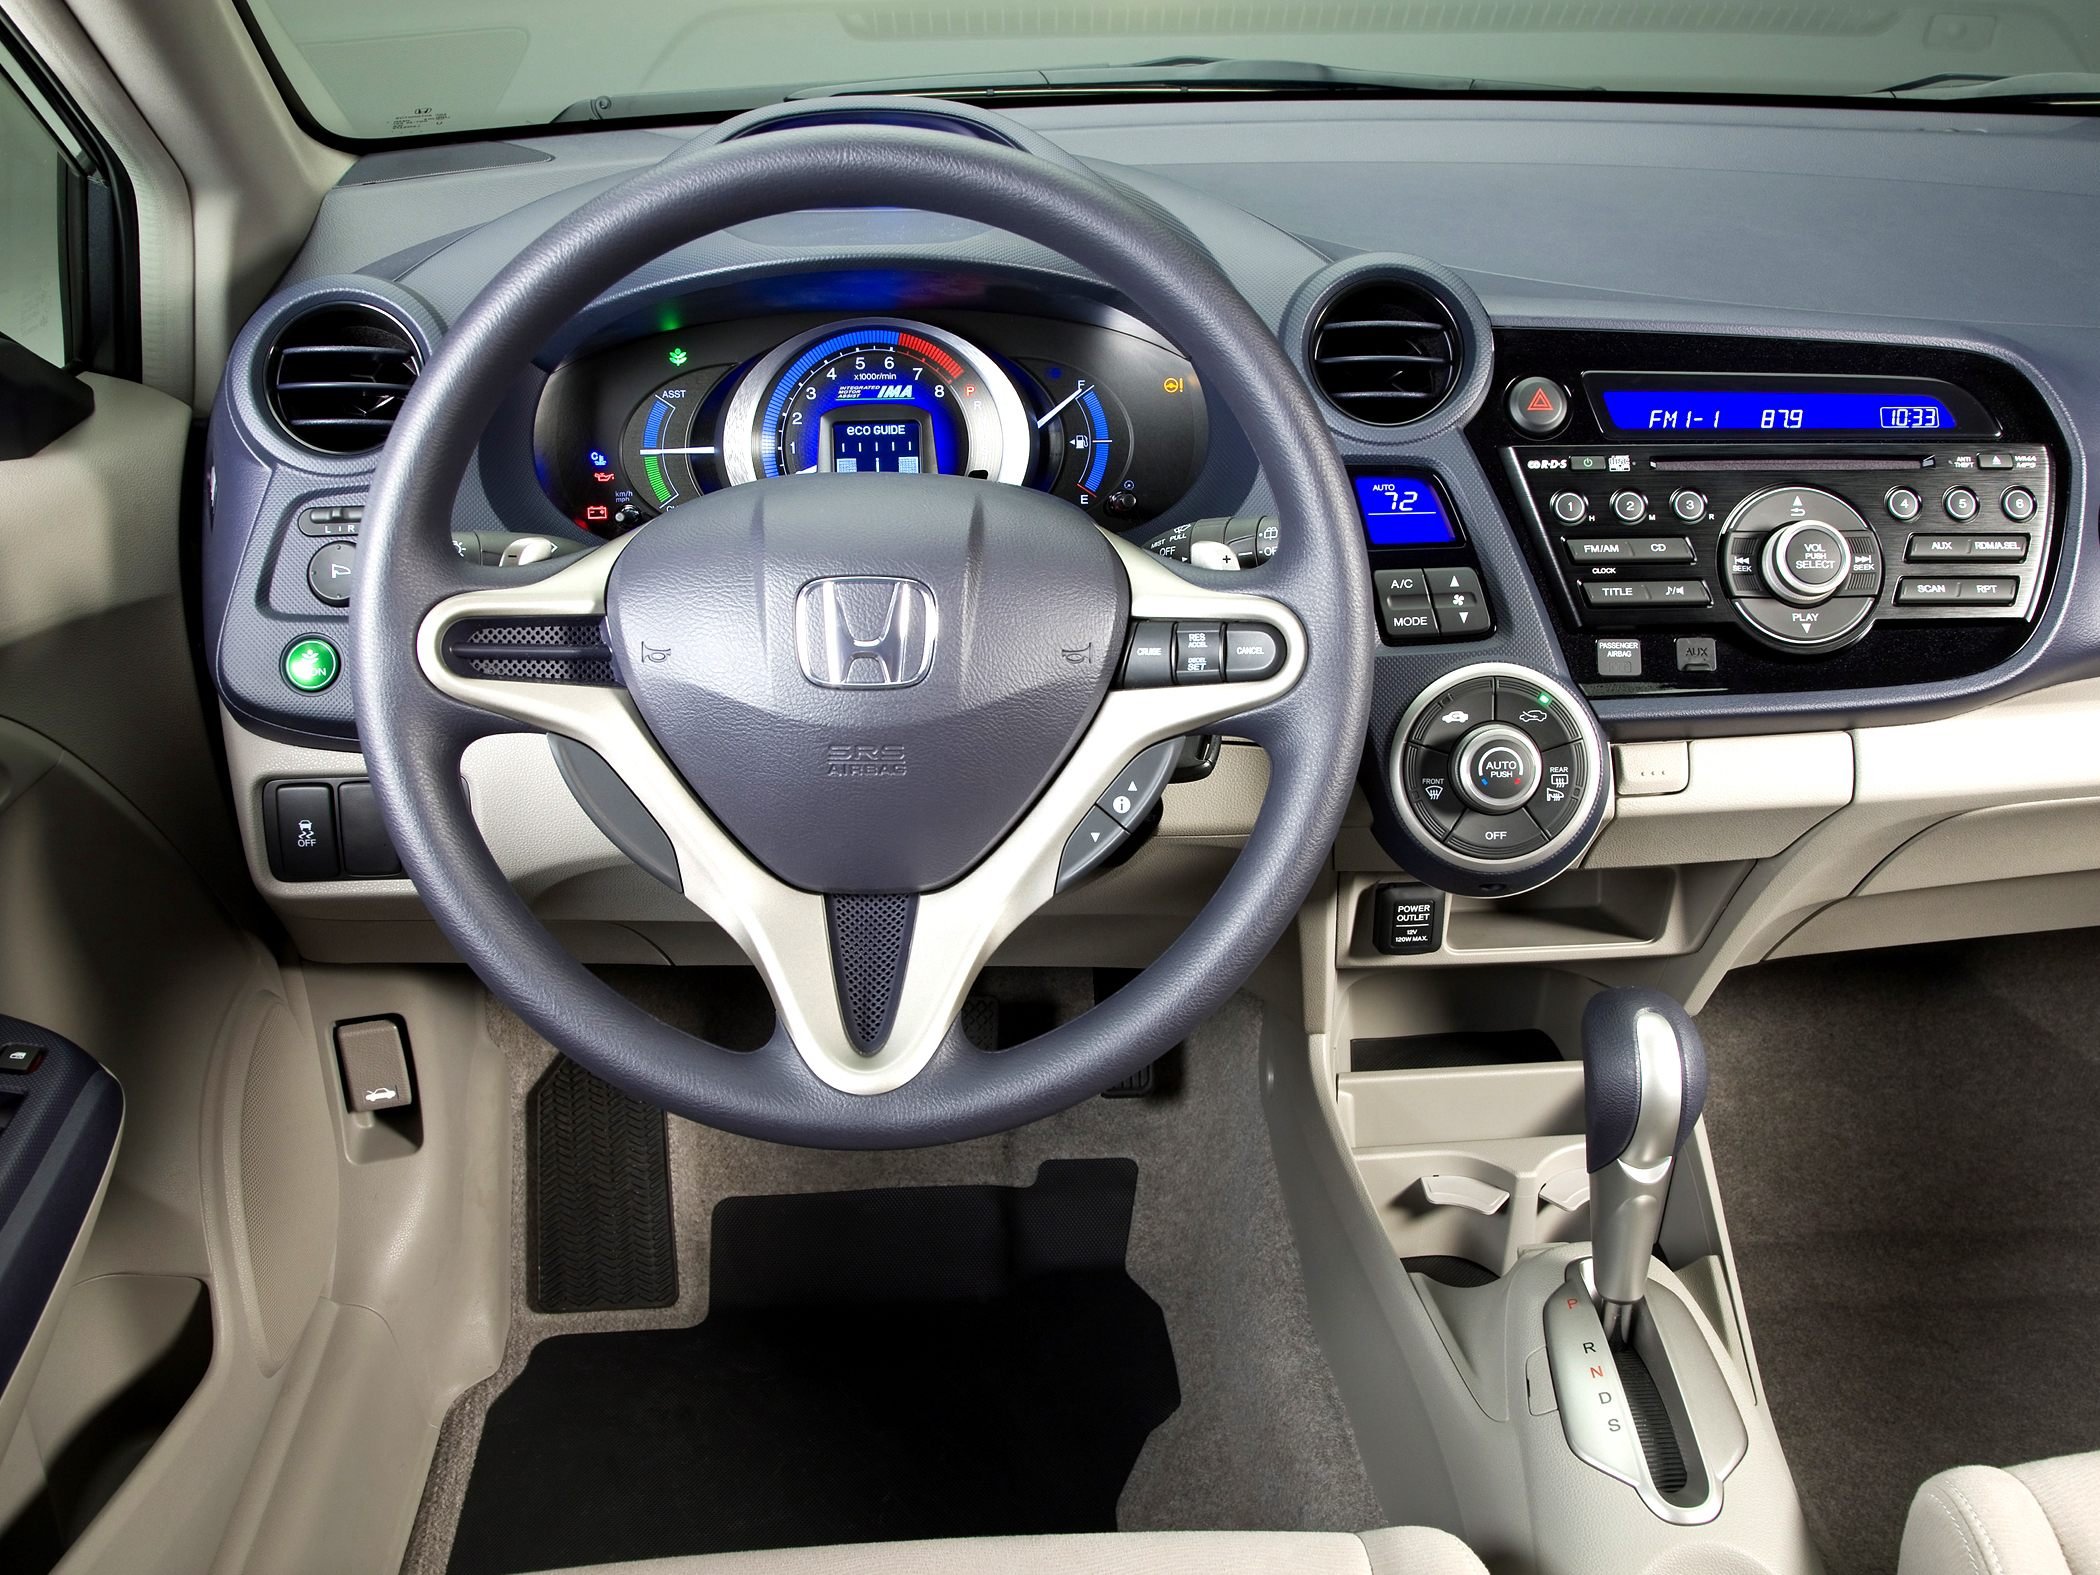 Хонда гибрид автомобиля. Хонда Инсайт гибрид 2009. Хонда Инсайт гибрид 2009 салон. Honda Insight Hybrid 2010. Honda Insight 2009 салон.